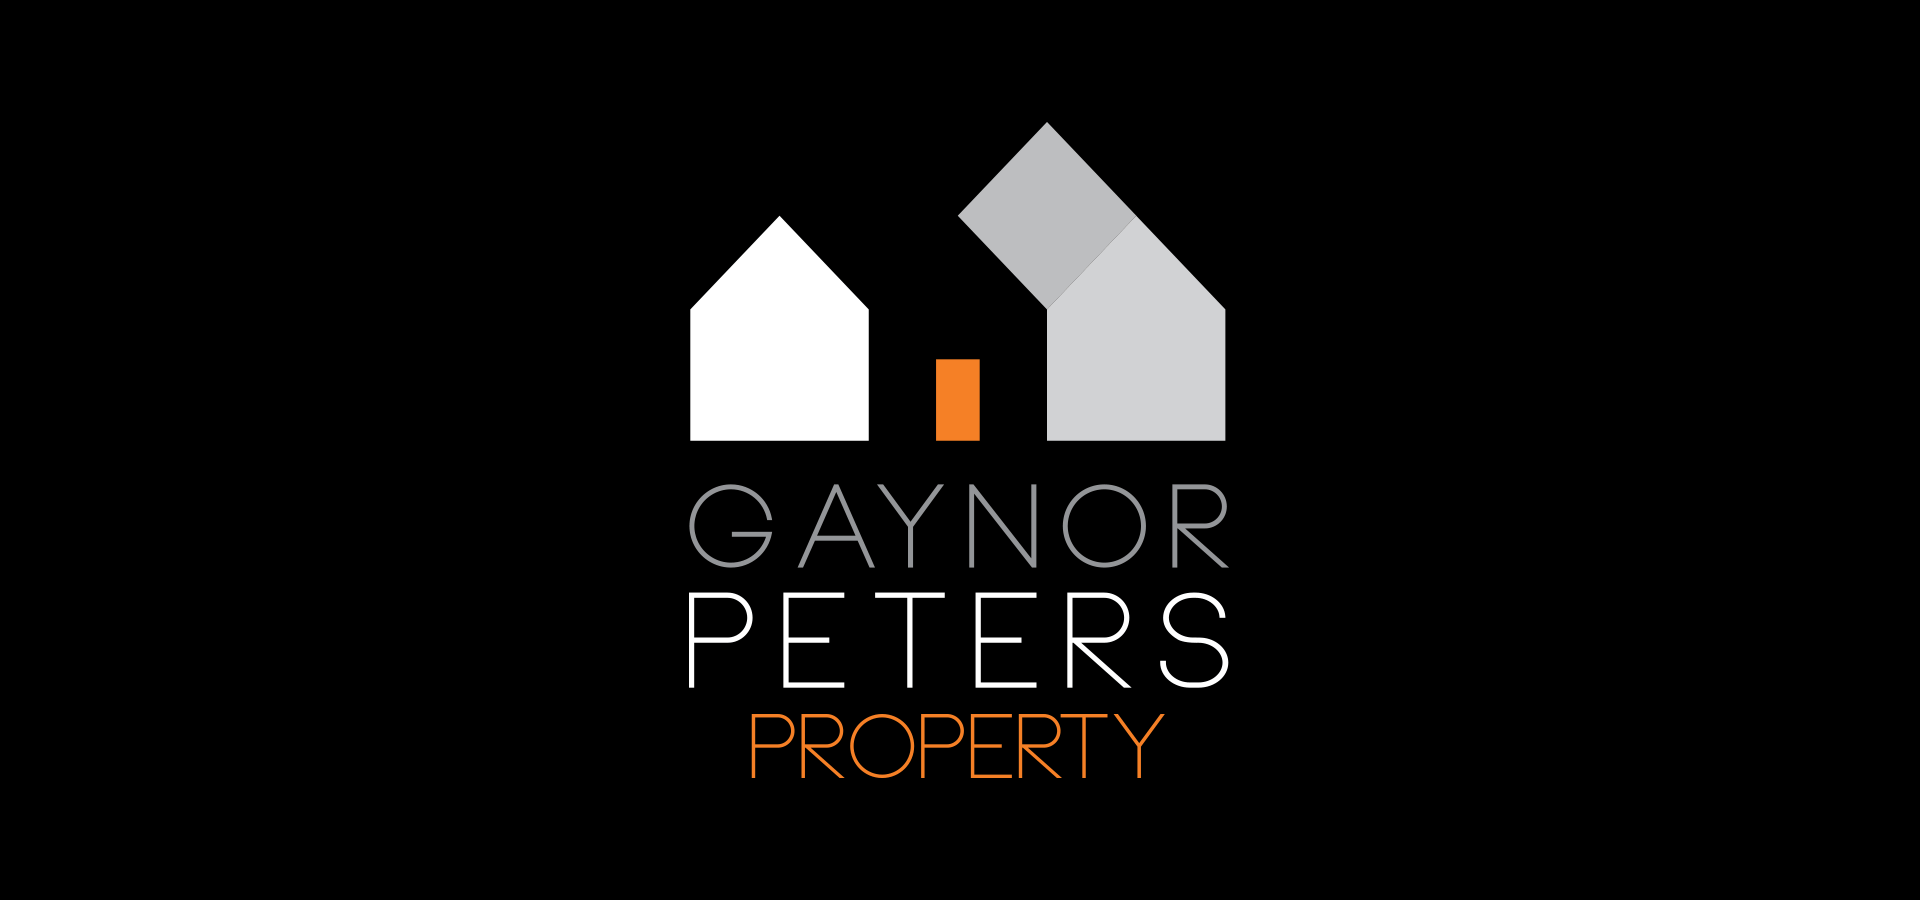 Gaynor Peters Property Logo